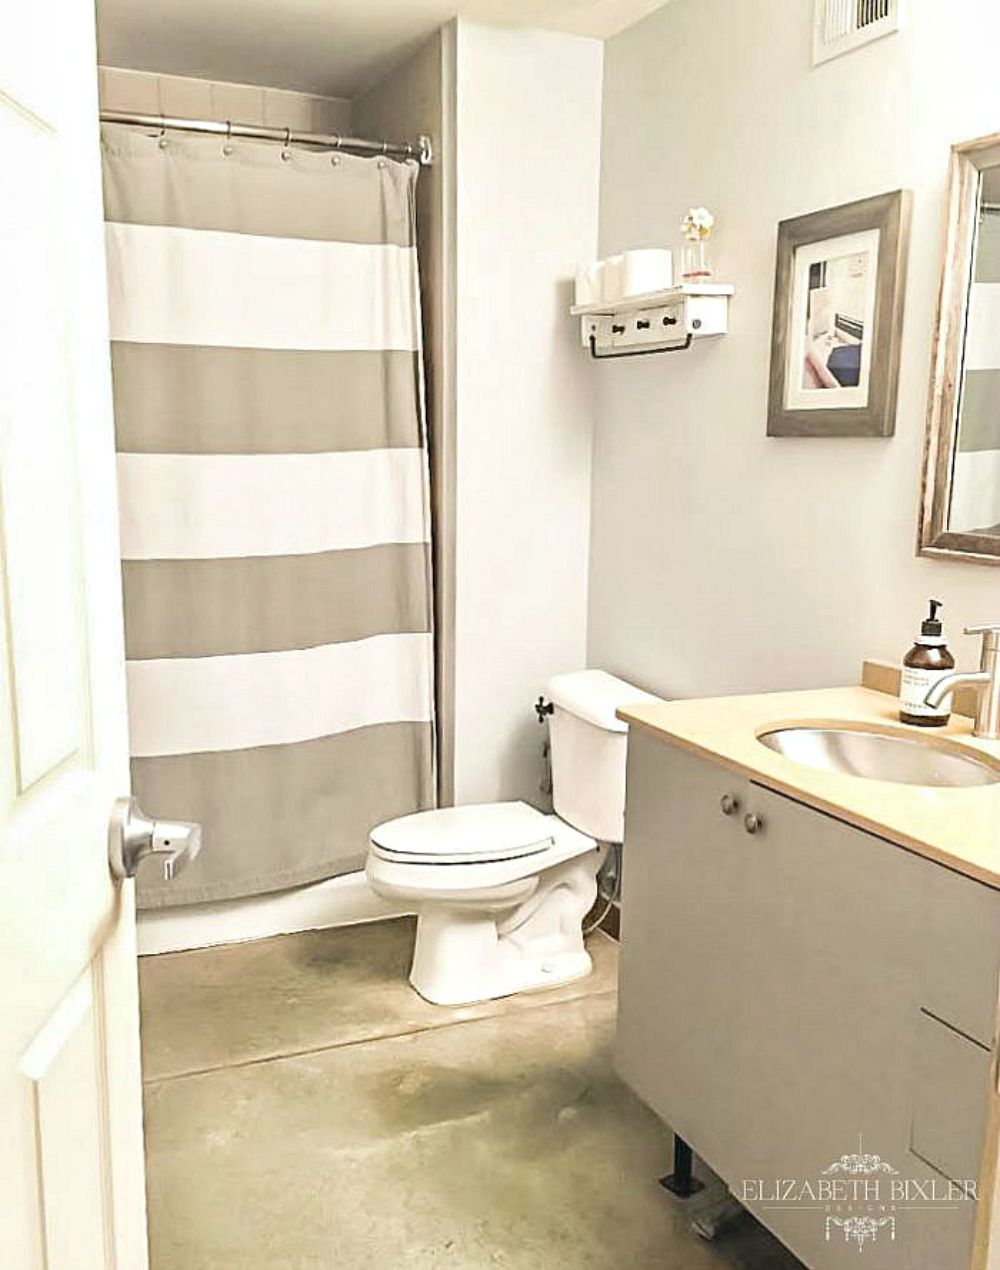 west elm shower curtain with gray bathroom nautical decor